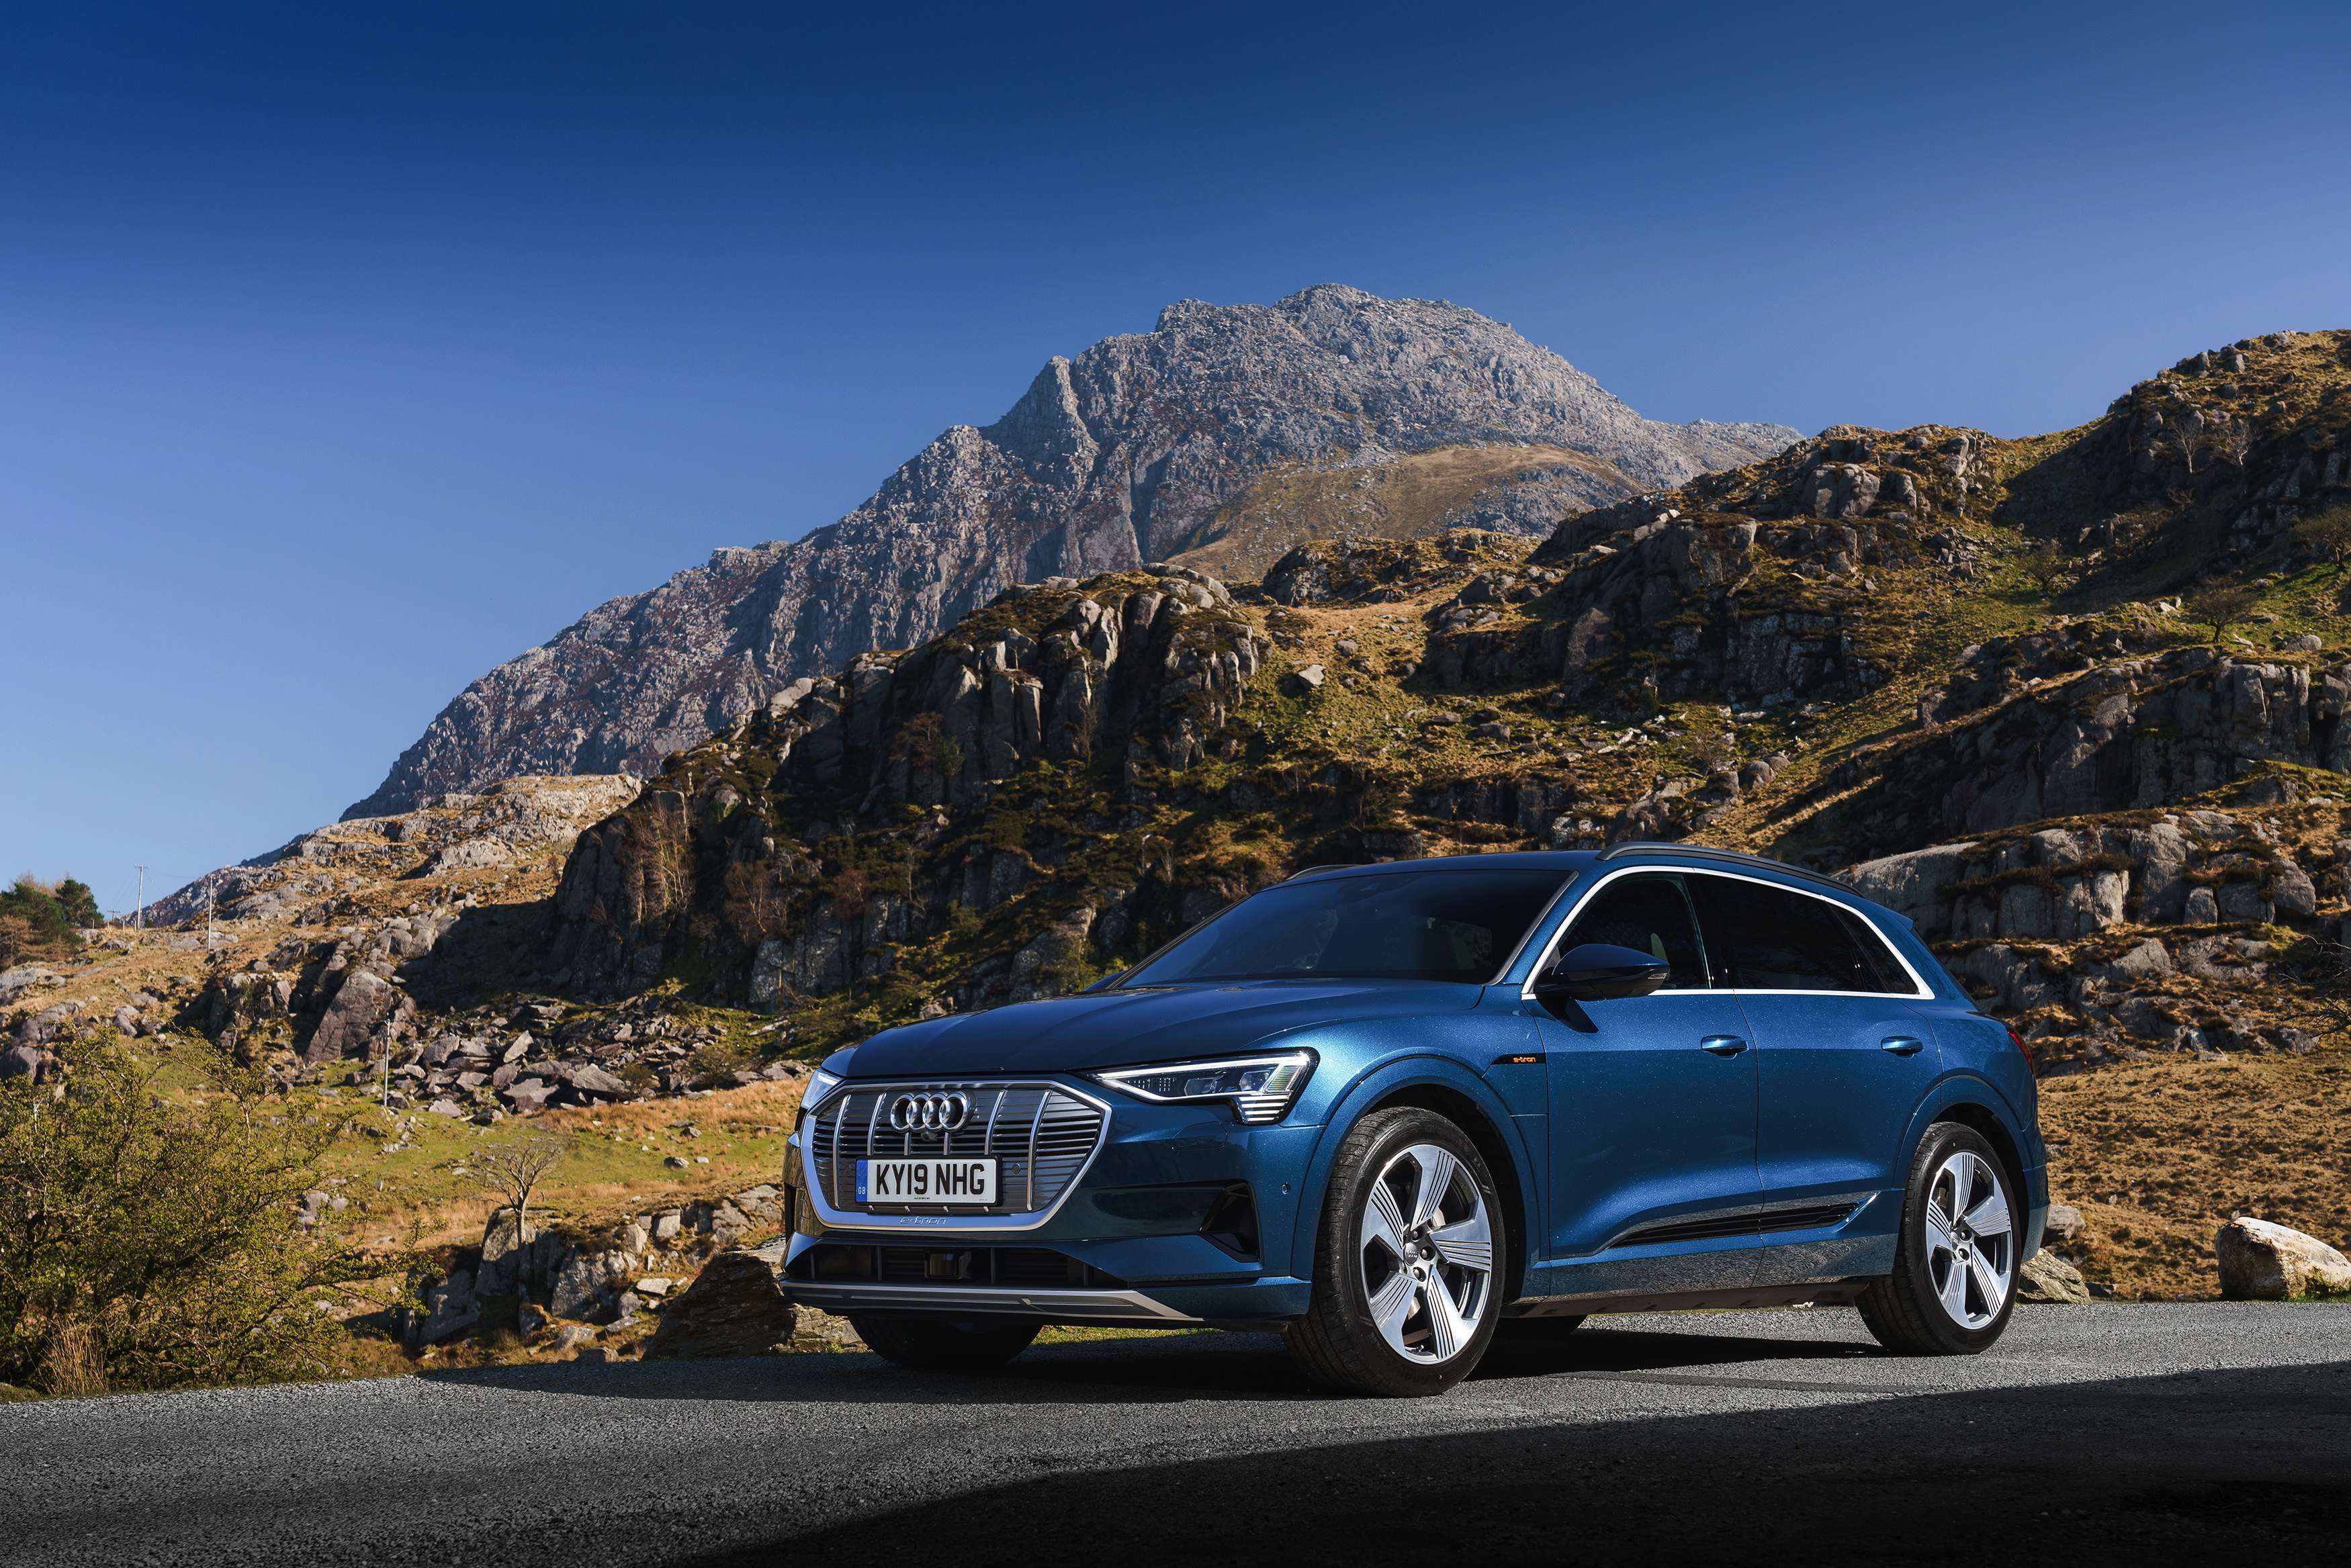 Audi Q7 HD Wallpaper | Background Image | 3500x2335 | ID ...